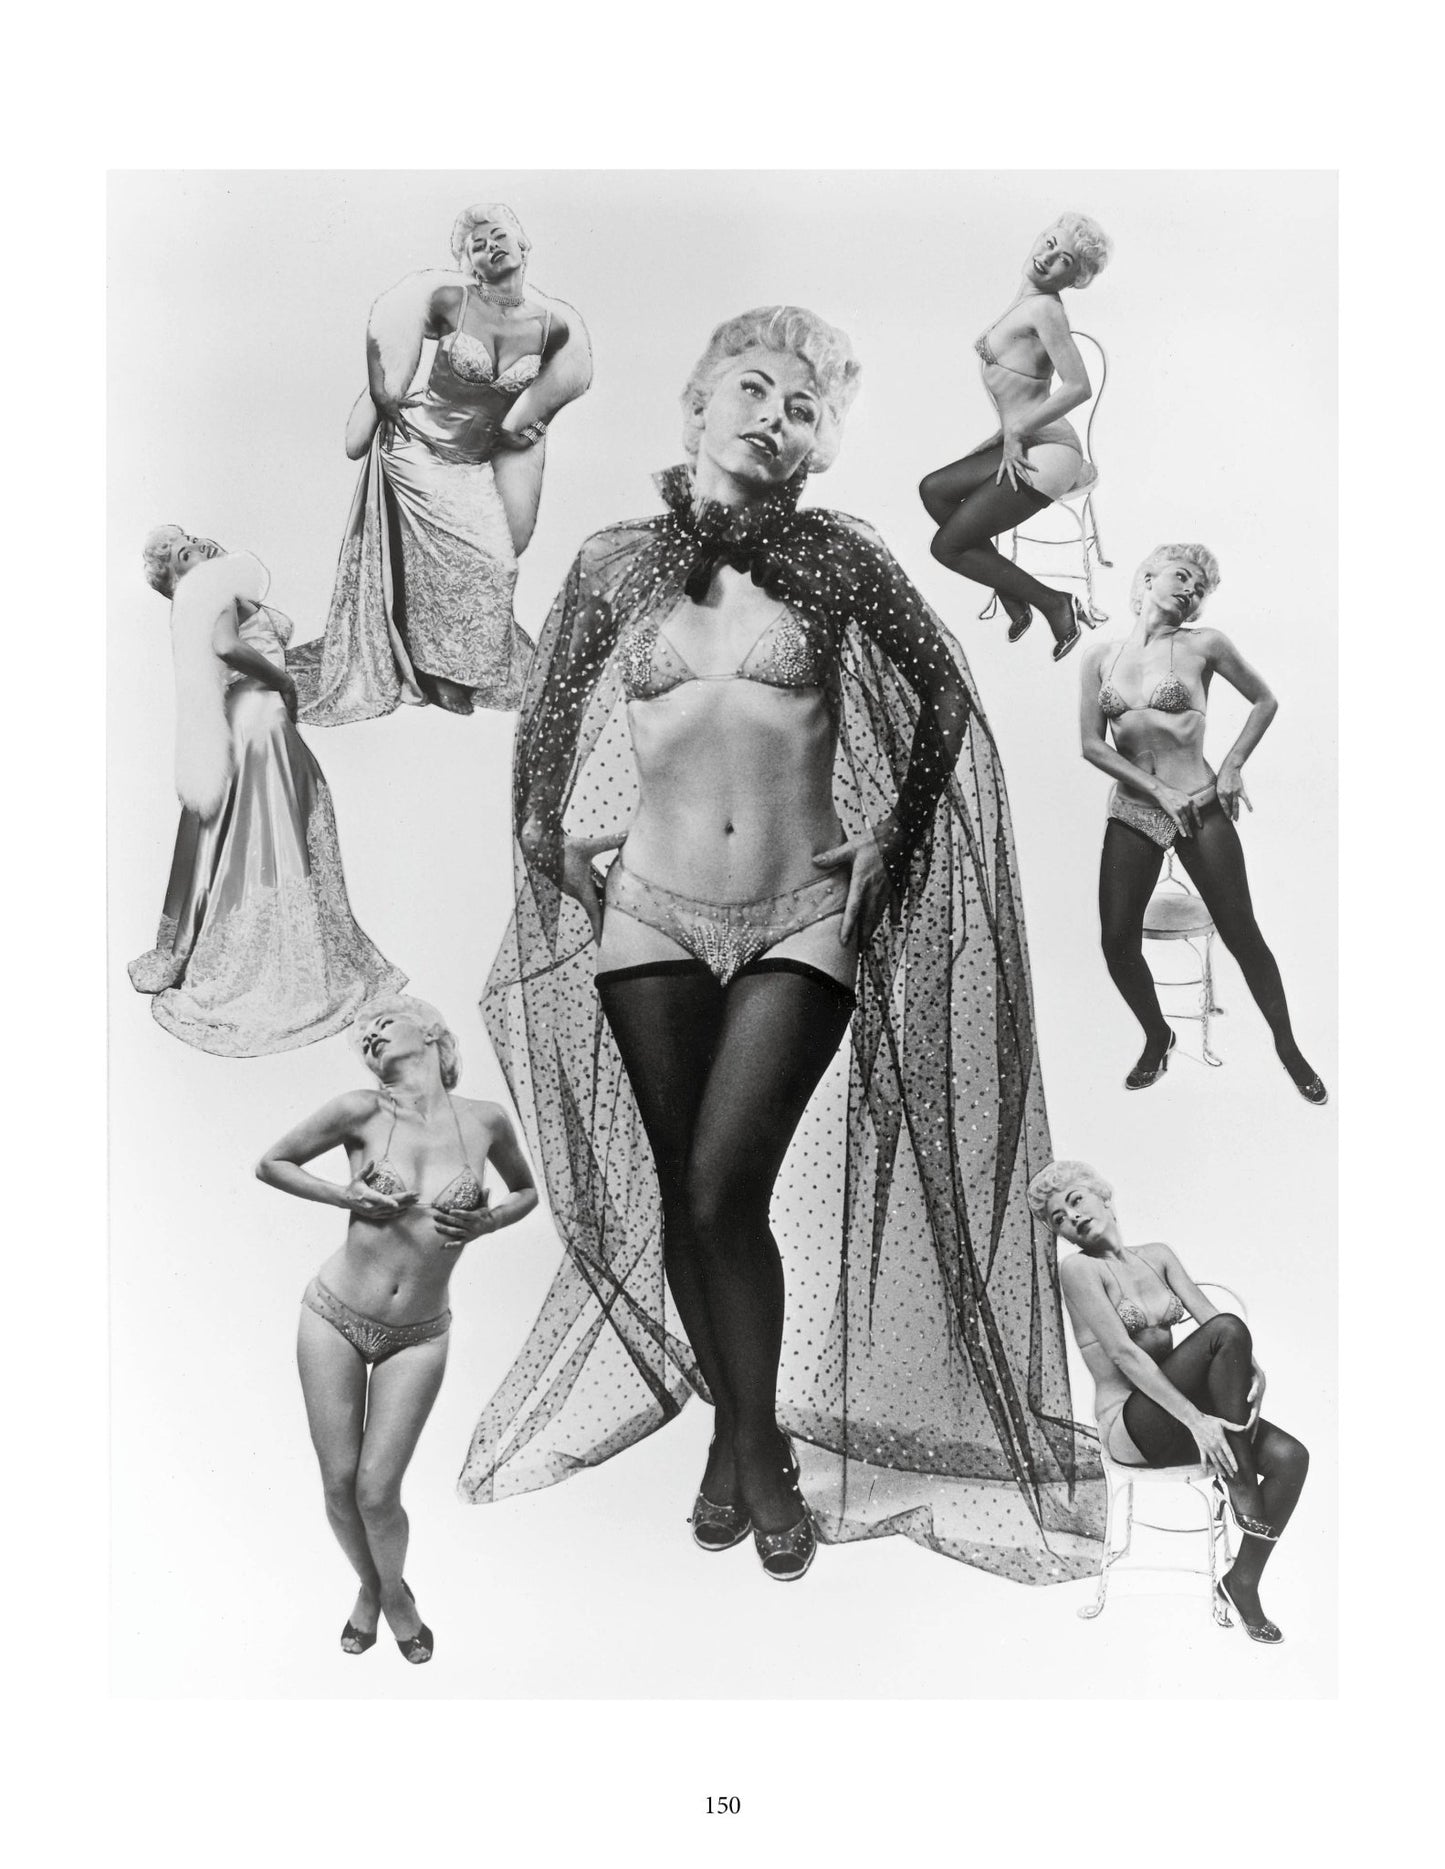 Schiffer Publishing - New York Burlesquephotographs by Roy Kemp - The Oddity Den